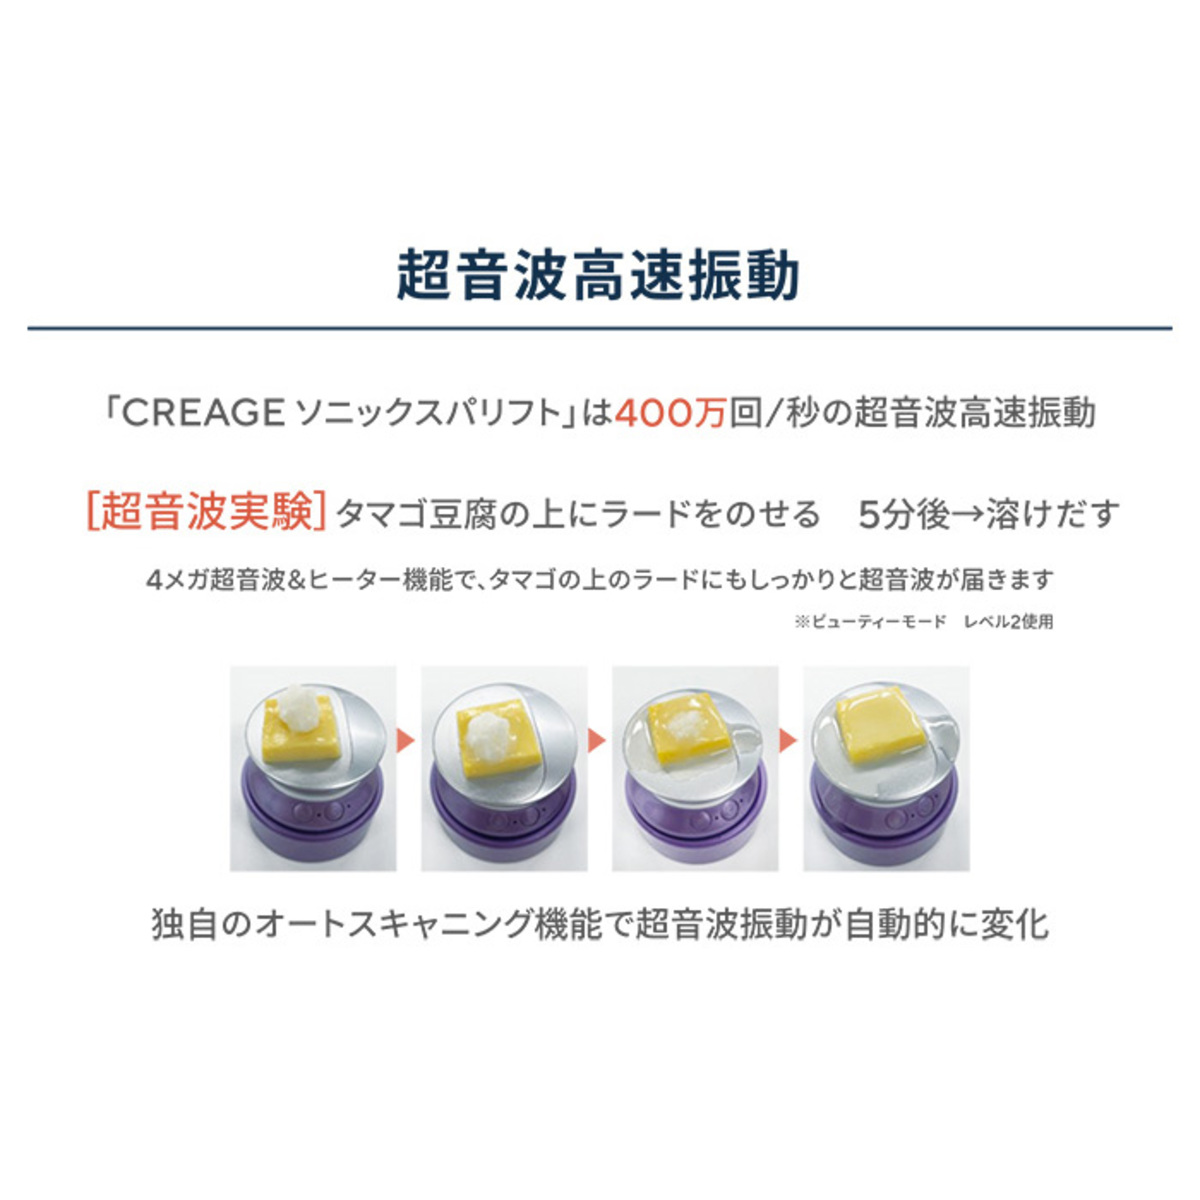 4MHz超音波美顔器Creage「ソニックスパリフト」 - QVC.jp